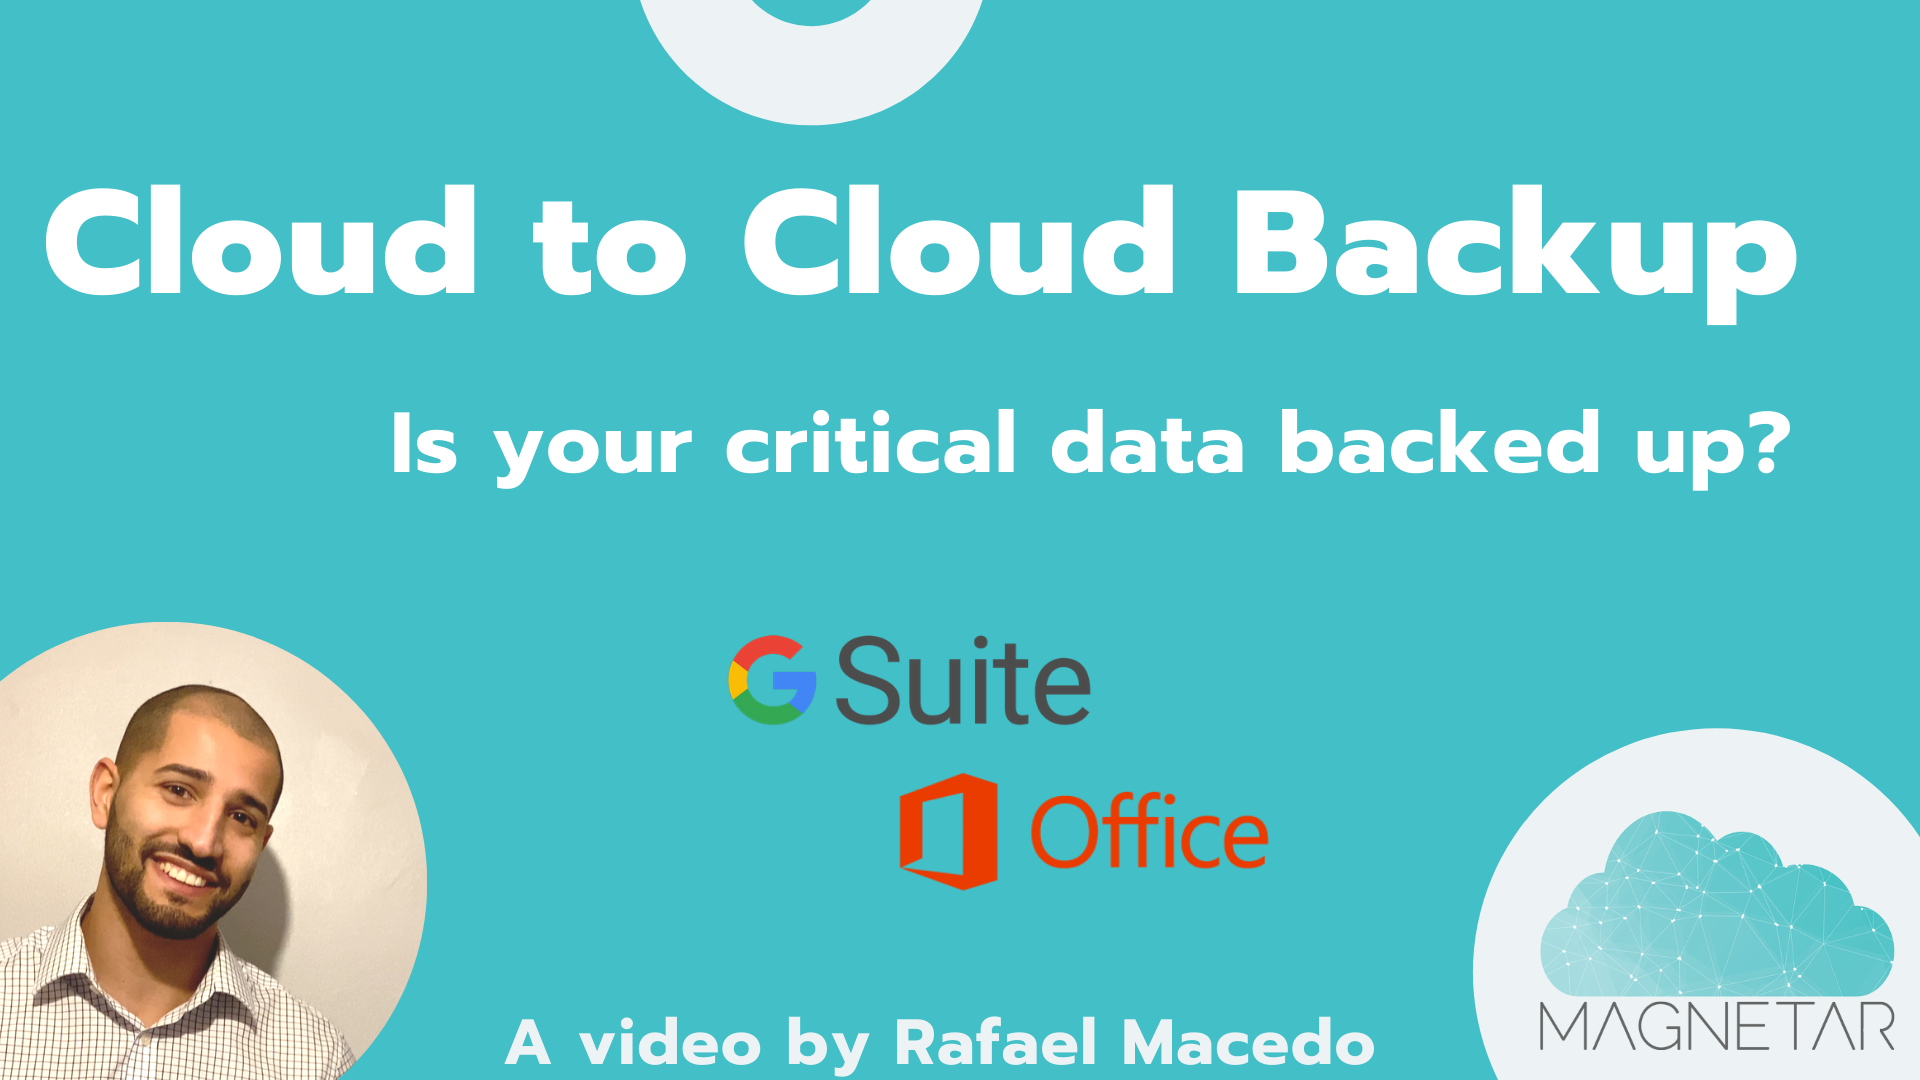 Video: Cloud to Cloud Backup